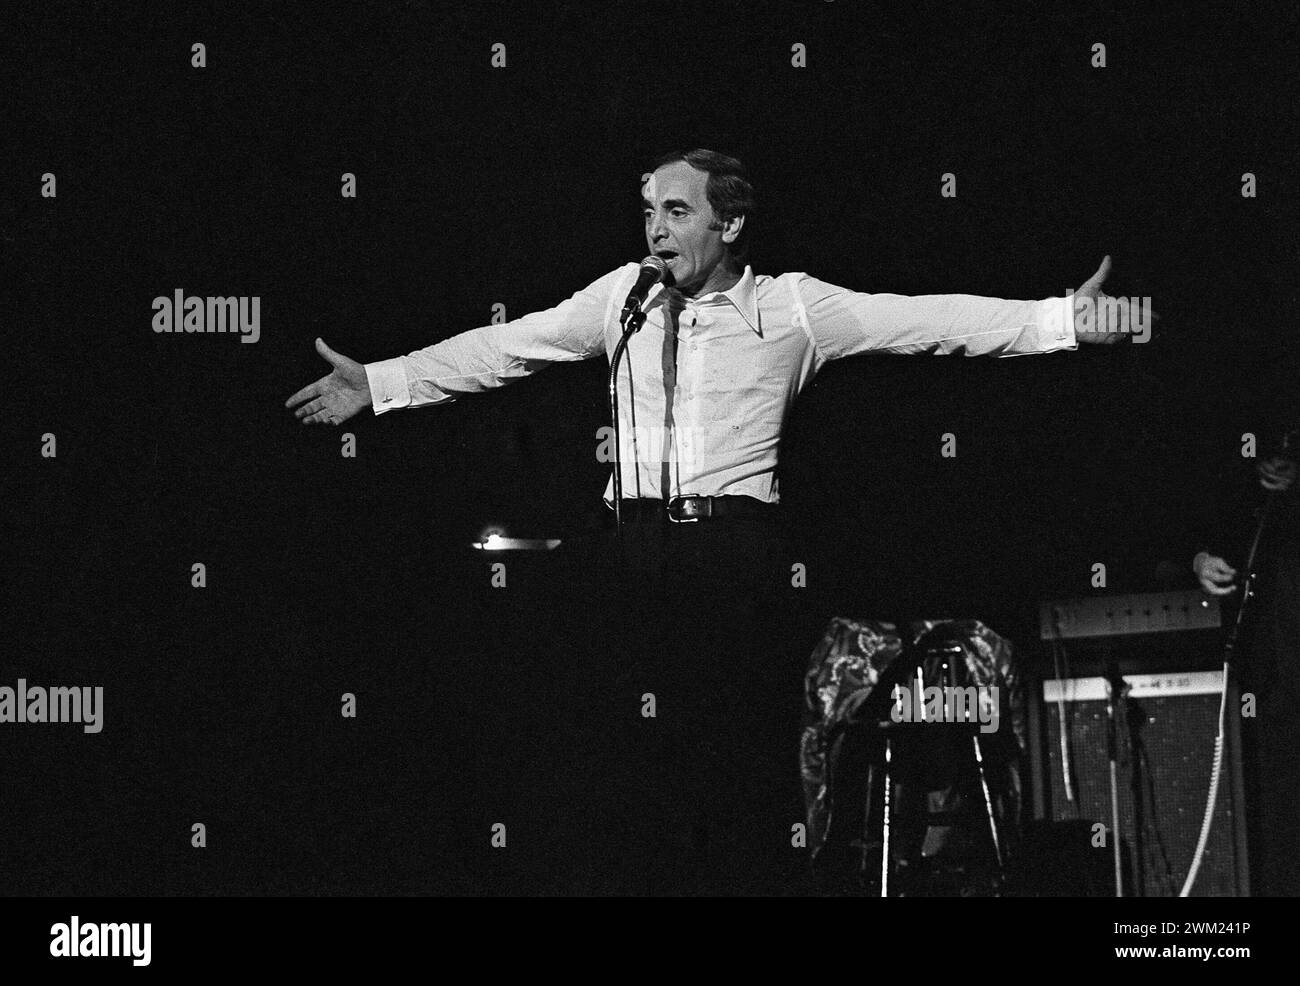 MME4773039 Charles Aznavour performing, Teatro Sistina, Rome, 1979 (photo); (add.info.: Rome, Sistina Theater, 1979. French and Armenian singer Charles Aznavour performing/Roma, Teatro Sistina, 1979.); © Marcello Mencarini. All rights reserved 2024. Stock Photo